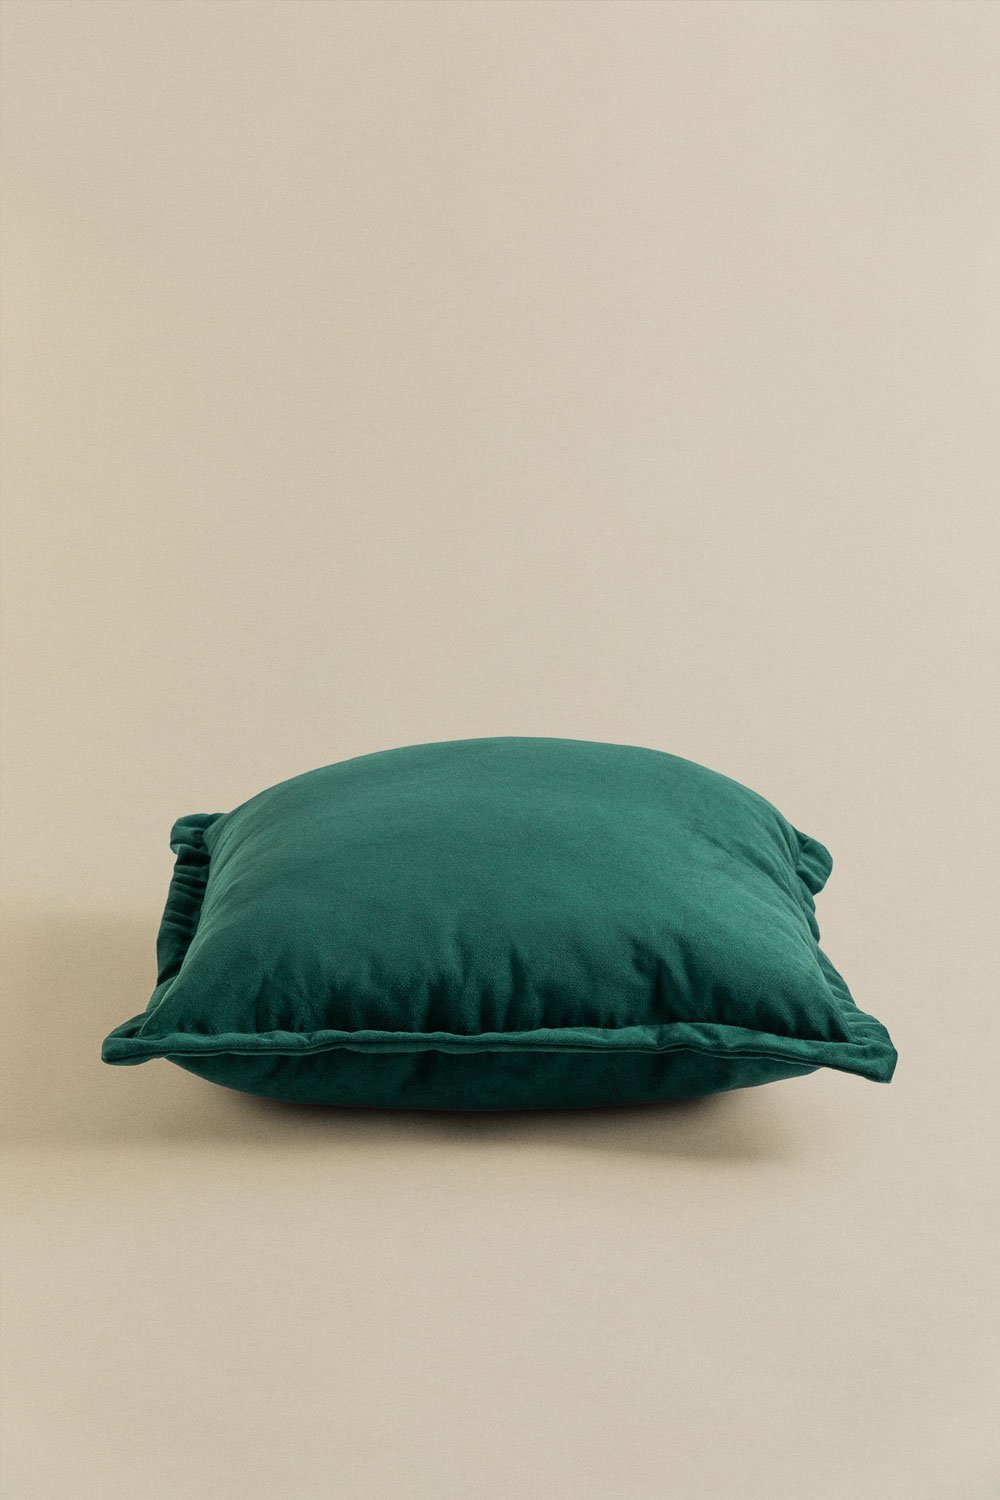 Square Velvet Cushion (53x53 cm) Kata, gallery image 2